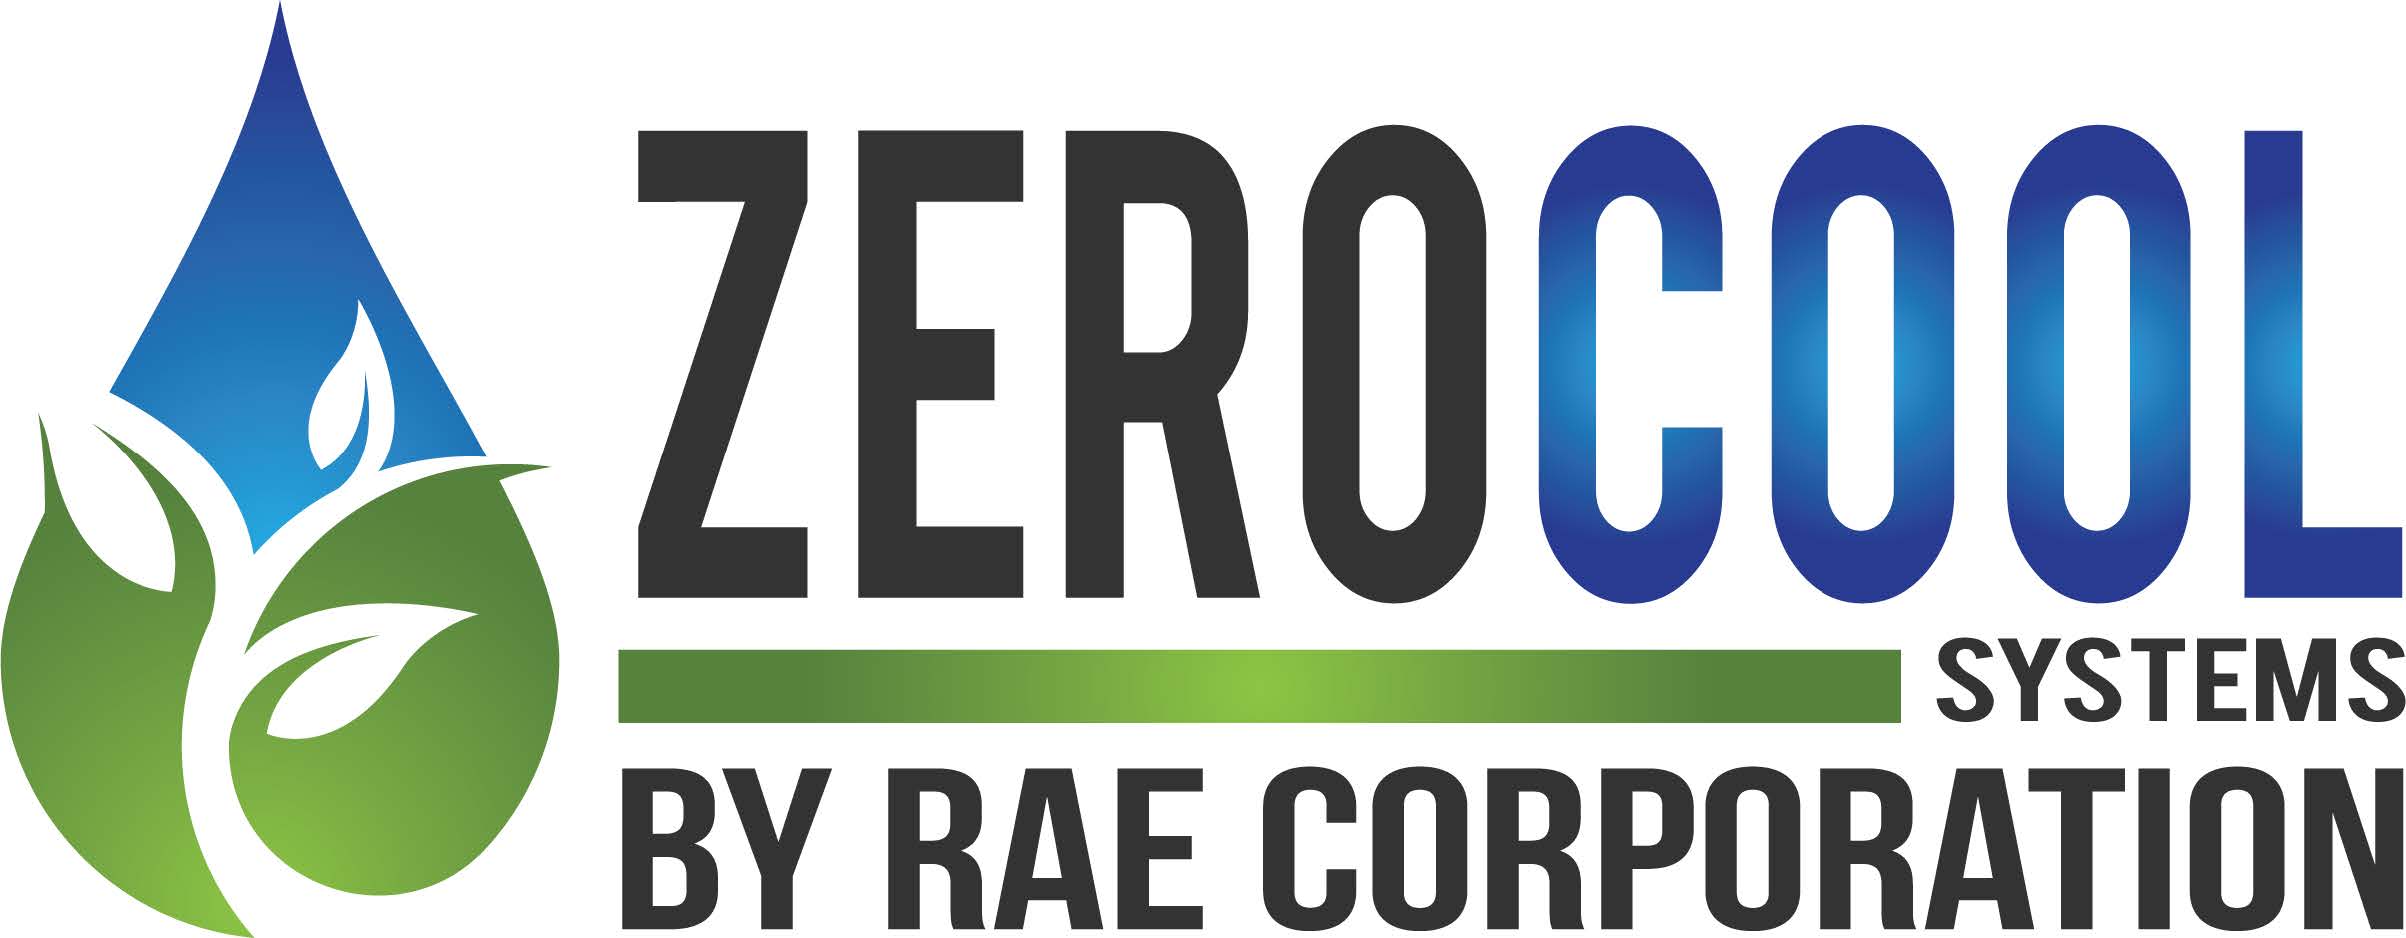 ZeroCool Systems